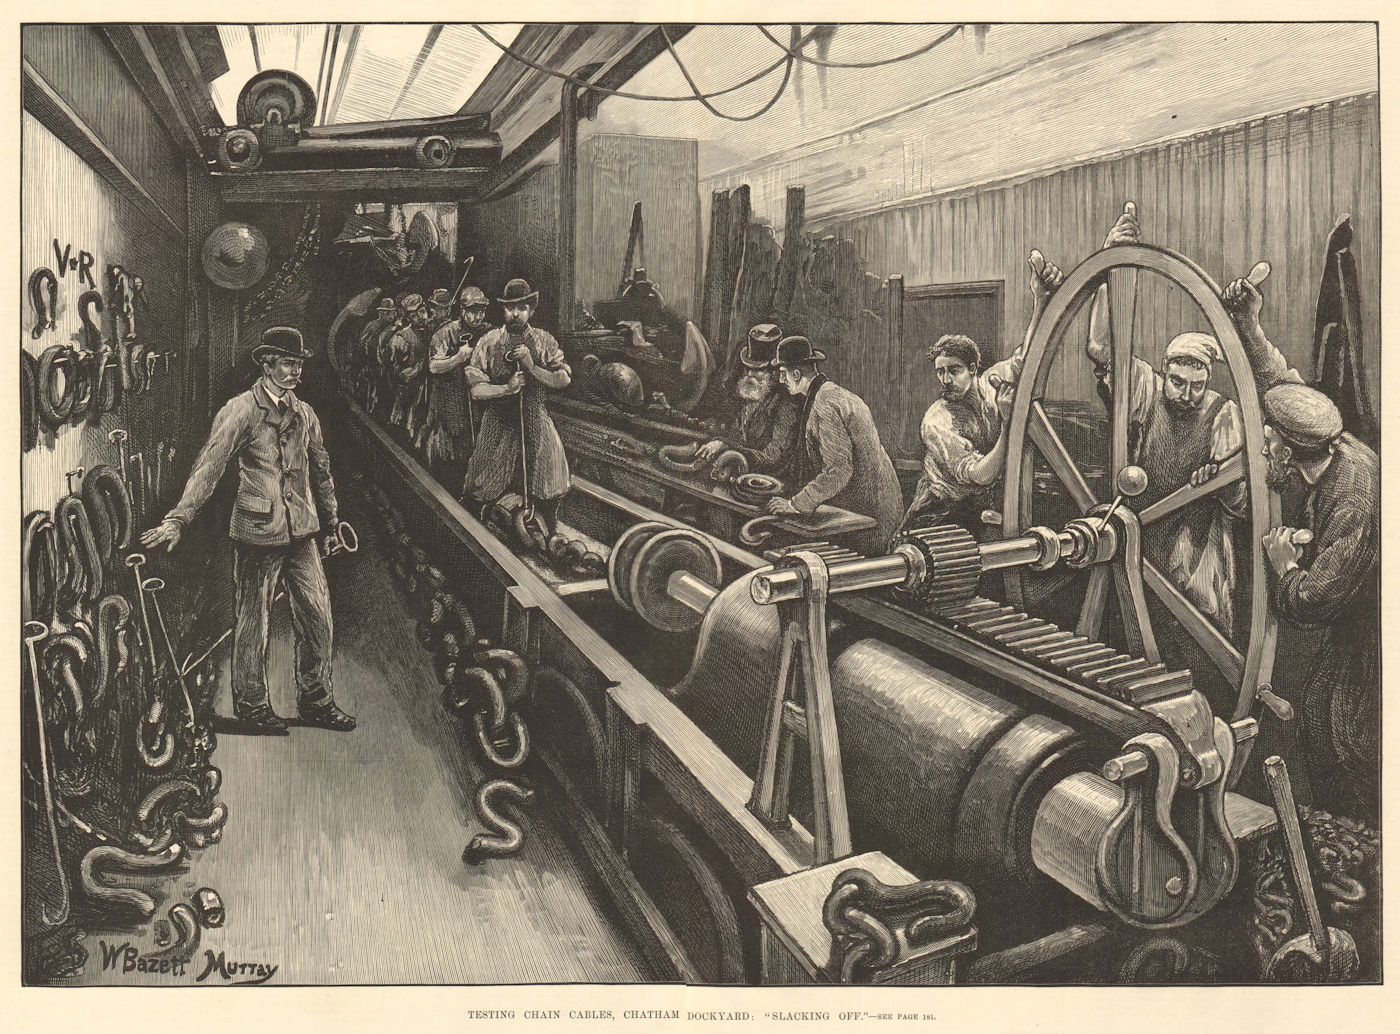 Testing chain cables, Chatham Dockyard: "Slacking off". Kent. Telegraphs 1880